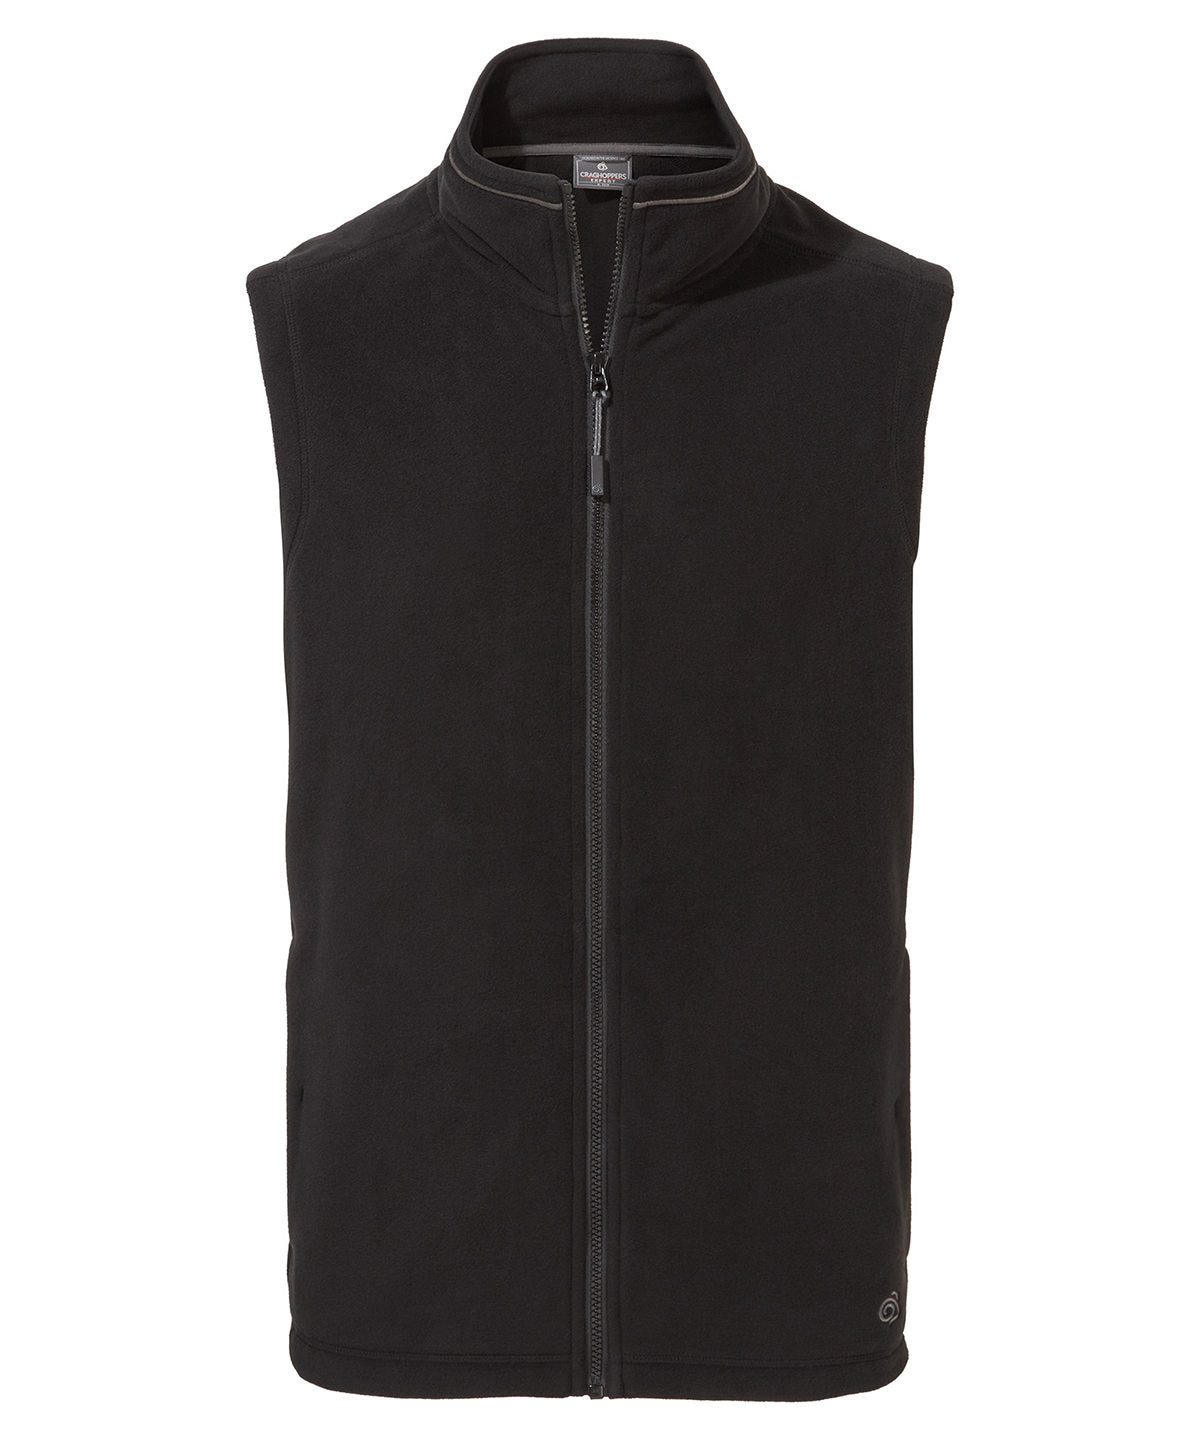 Personalised Vests - Black Craghoppers Expert Corey fleece vest